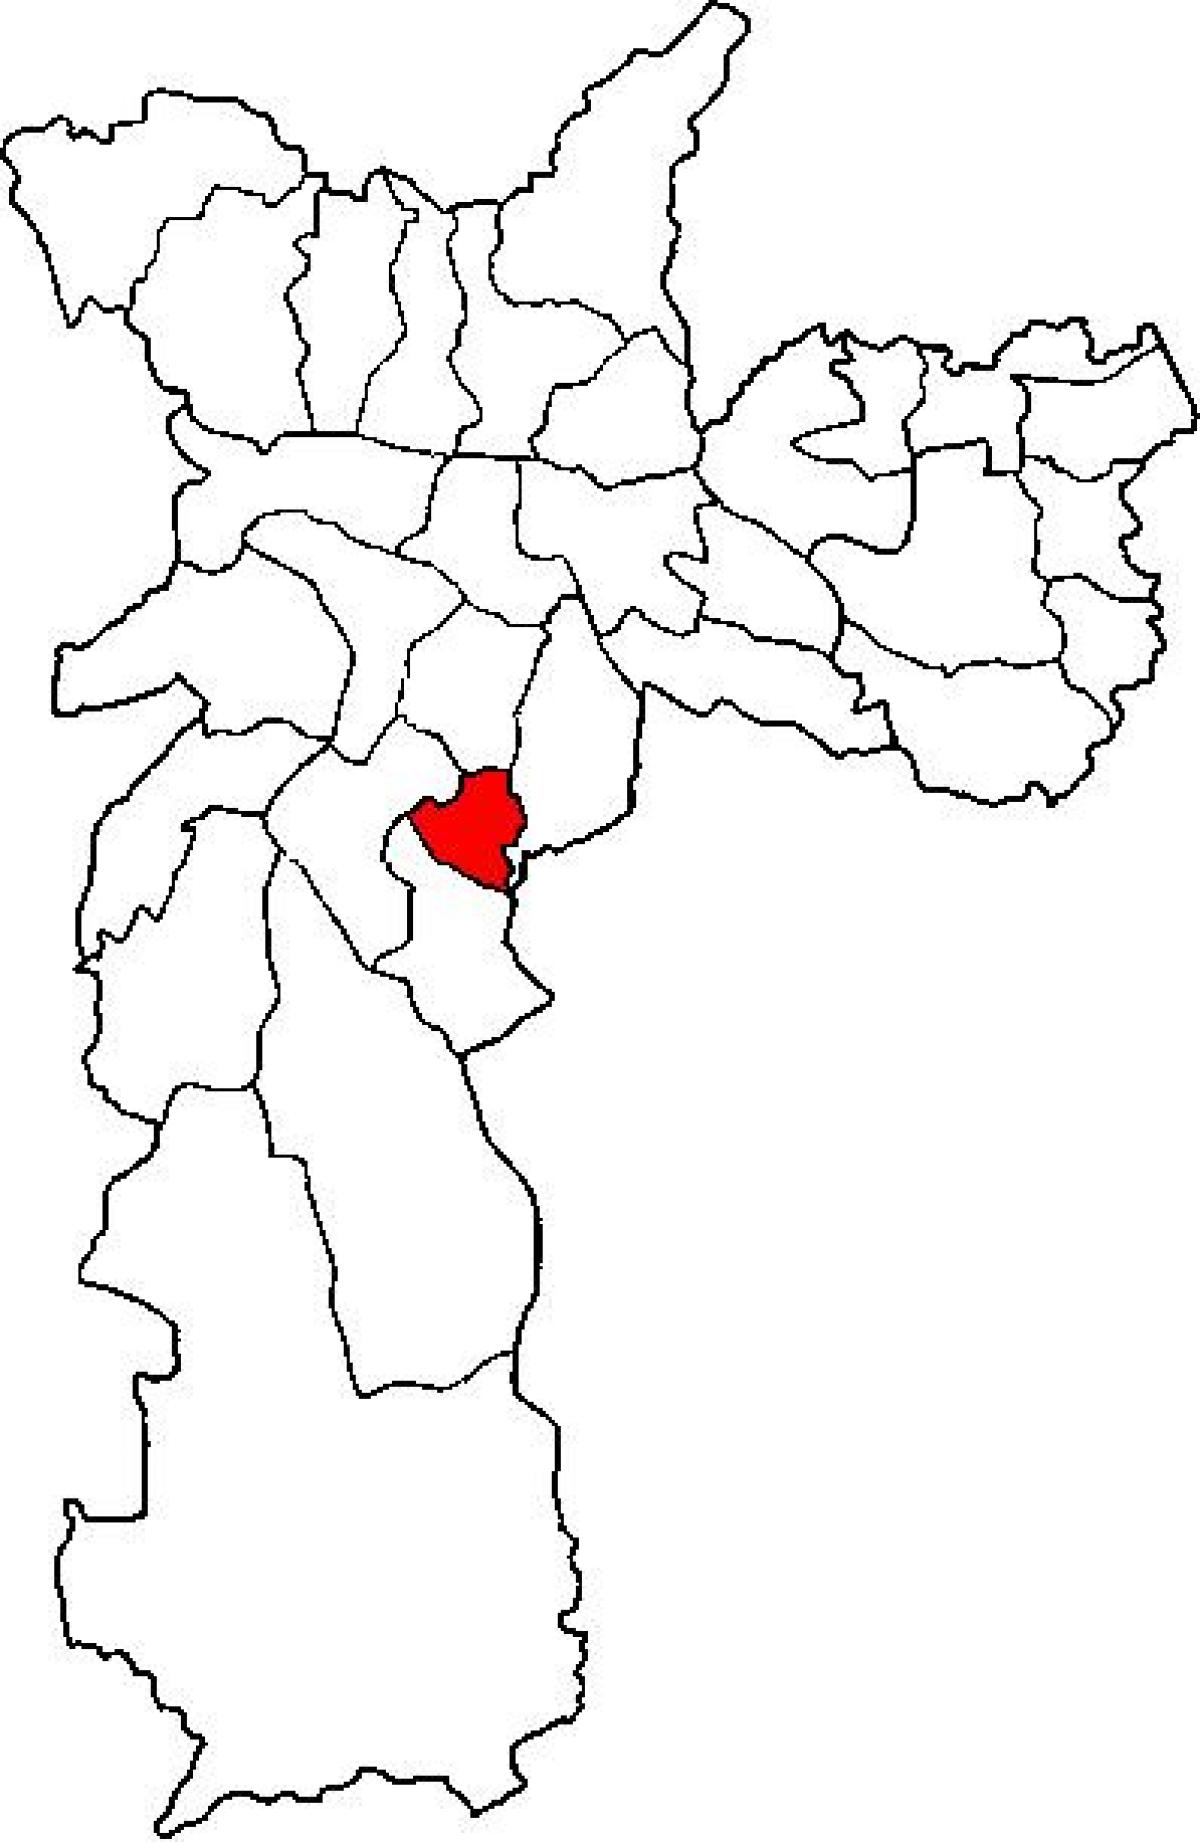 Карта суб-прэфектуры Жабакуара Сан-Паўлу